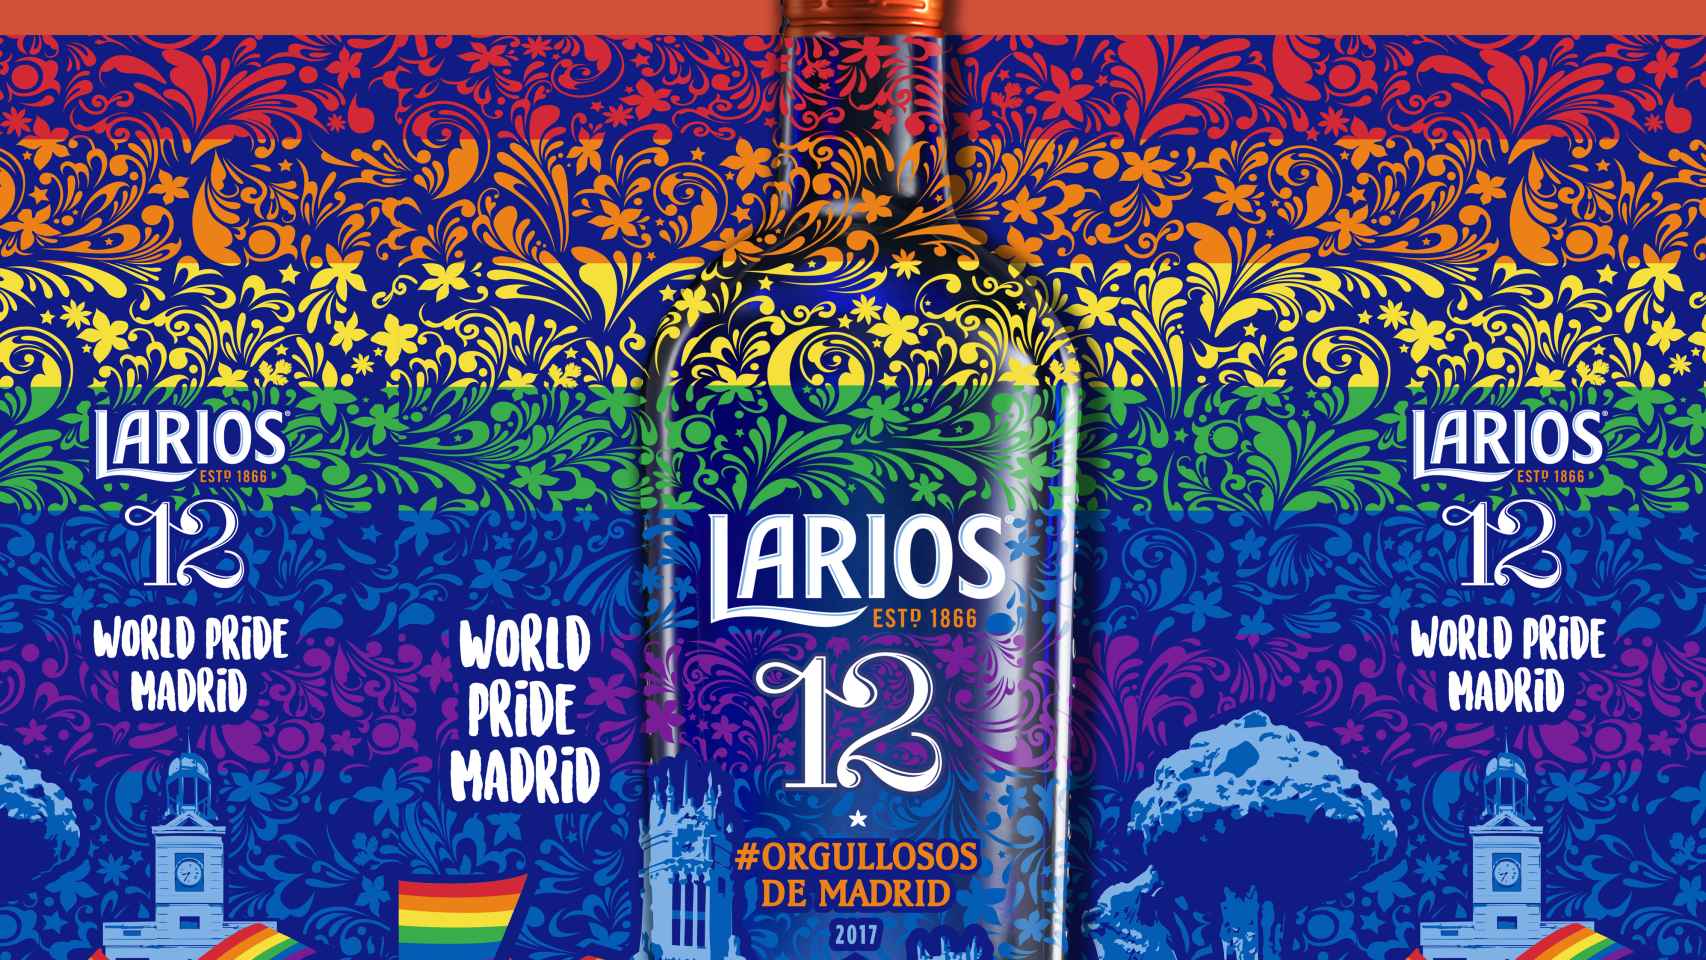 La divertida botella de Larios 12 para el Orgullo LGTB.